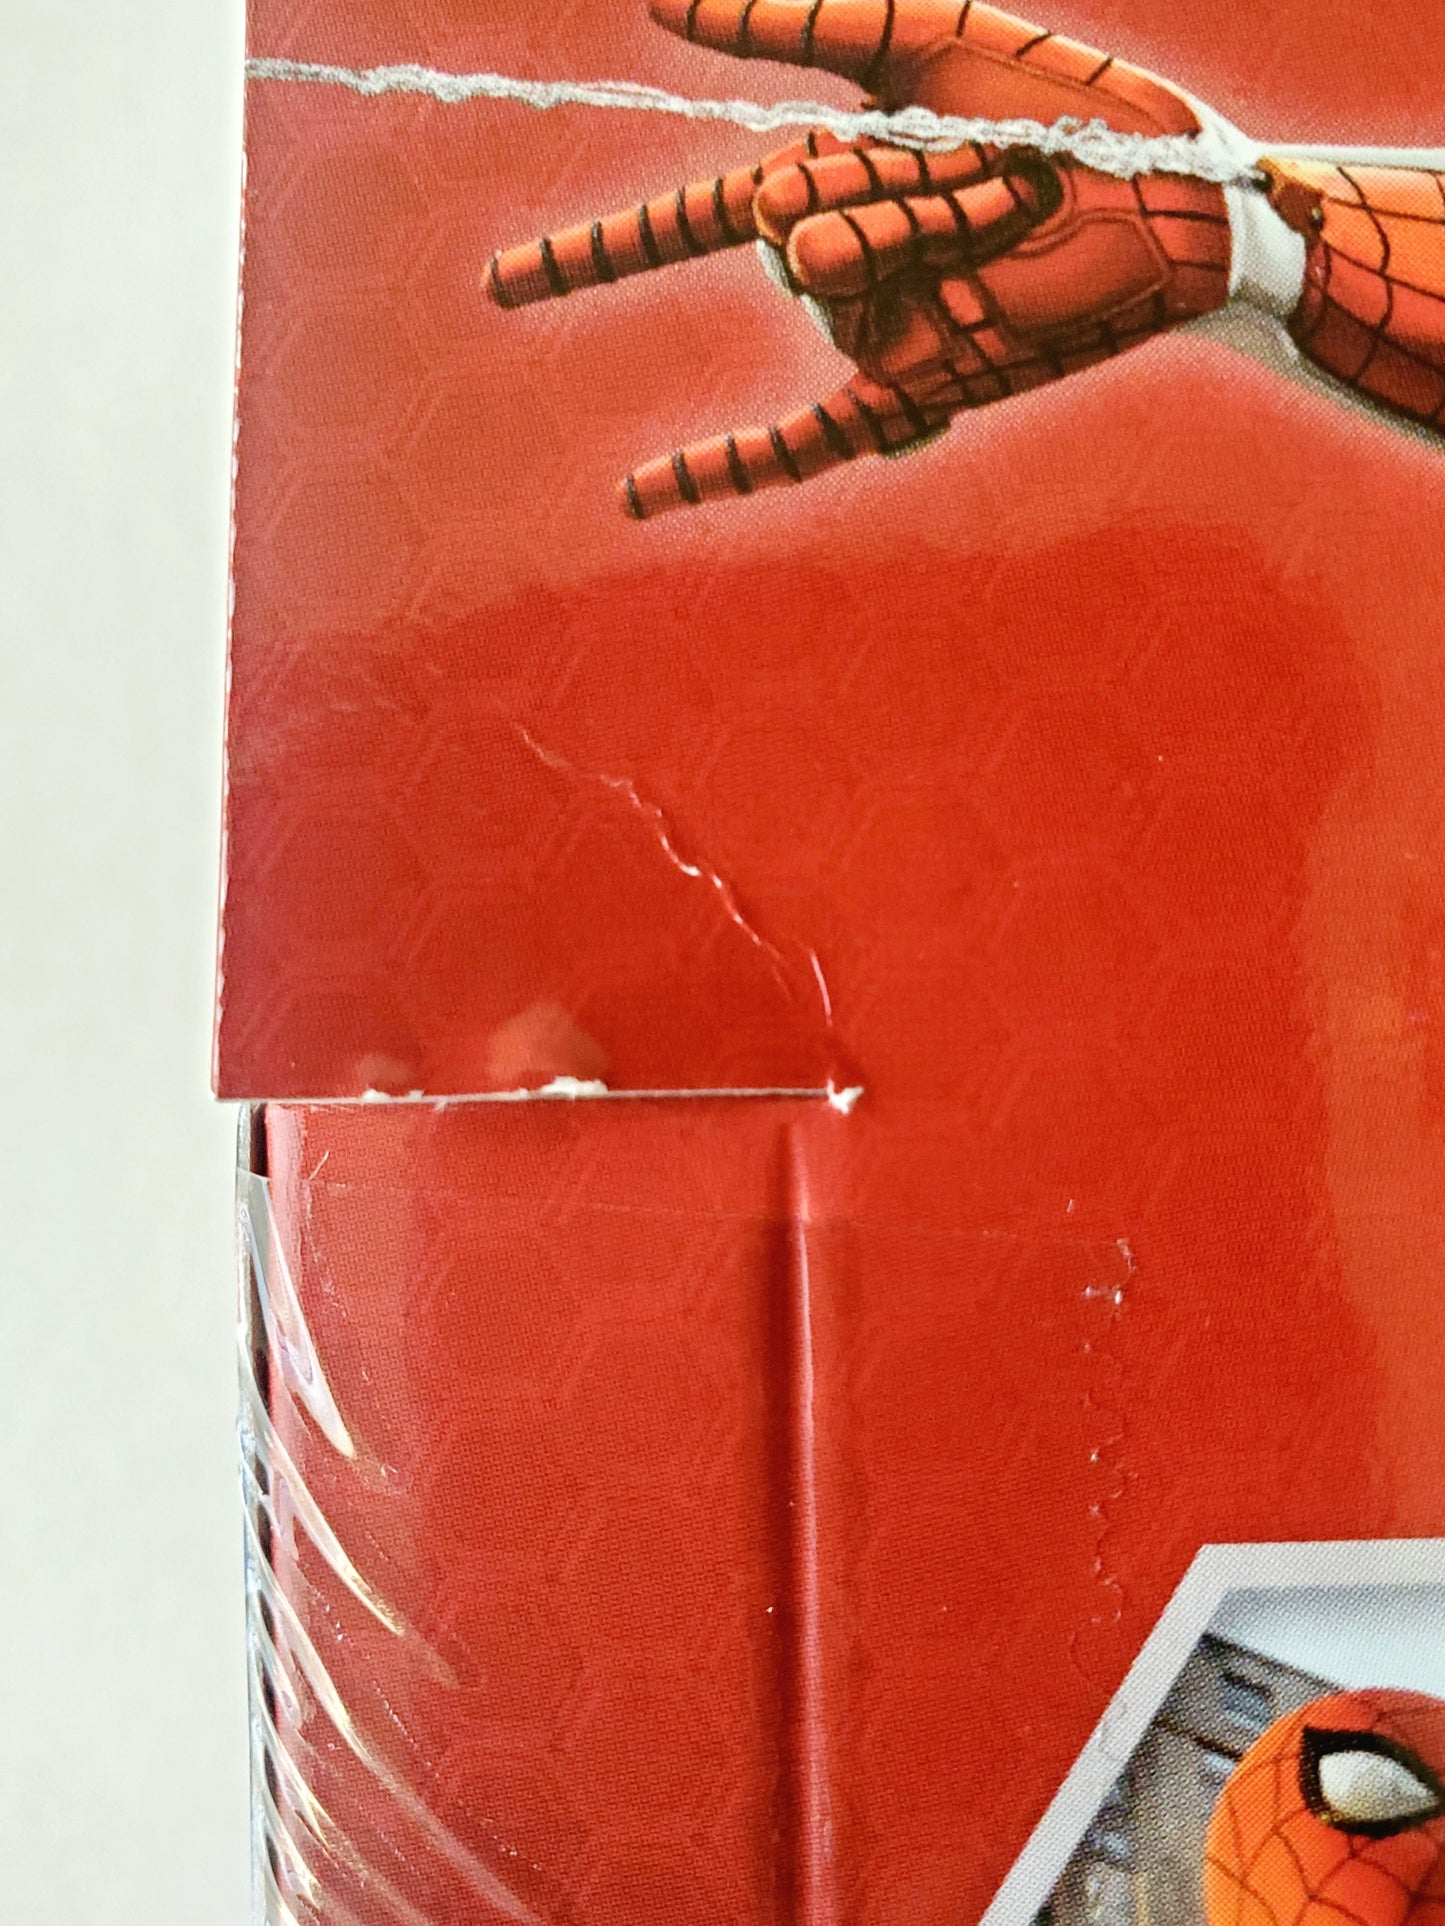 Marvel Legends Exclusive Gamerverse Spider-Man 6-Inch Action Figure